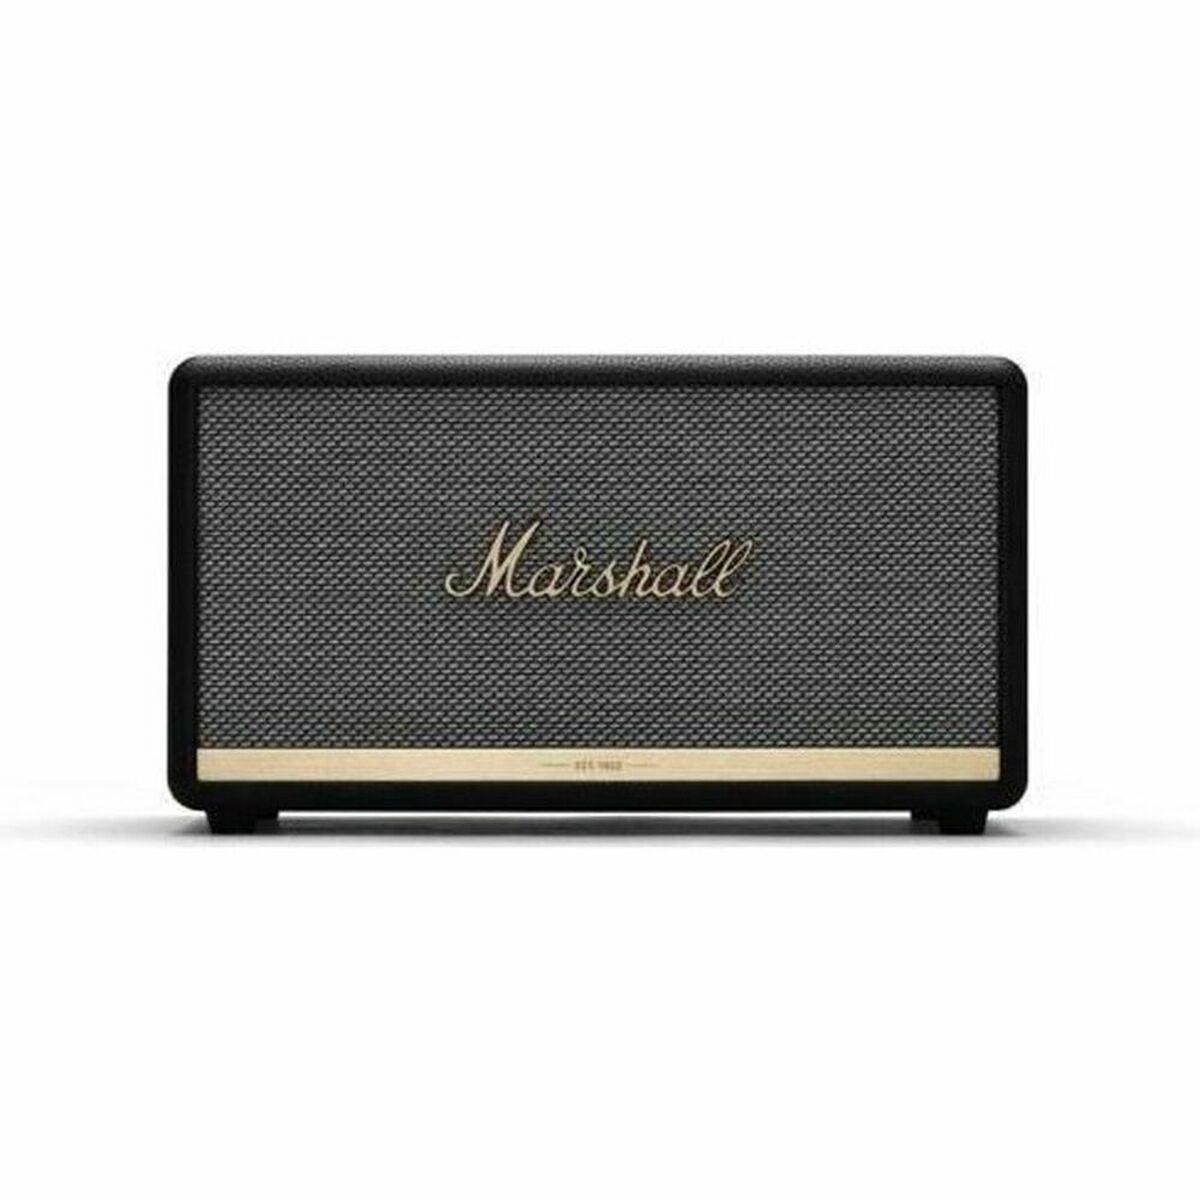 Altoparlante Bluetooth Portatile Marshall 80 W